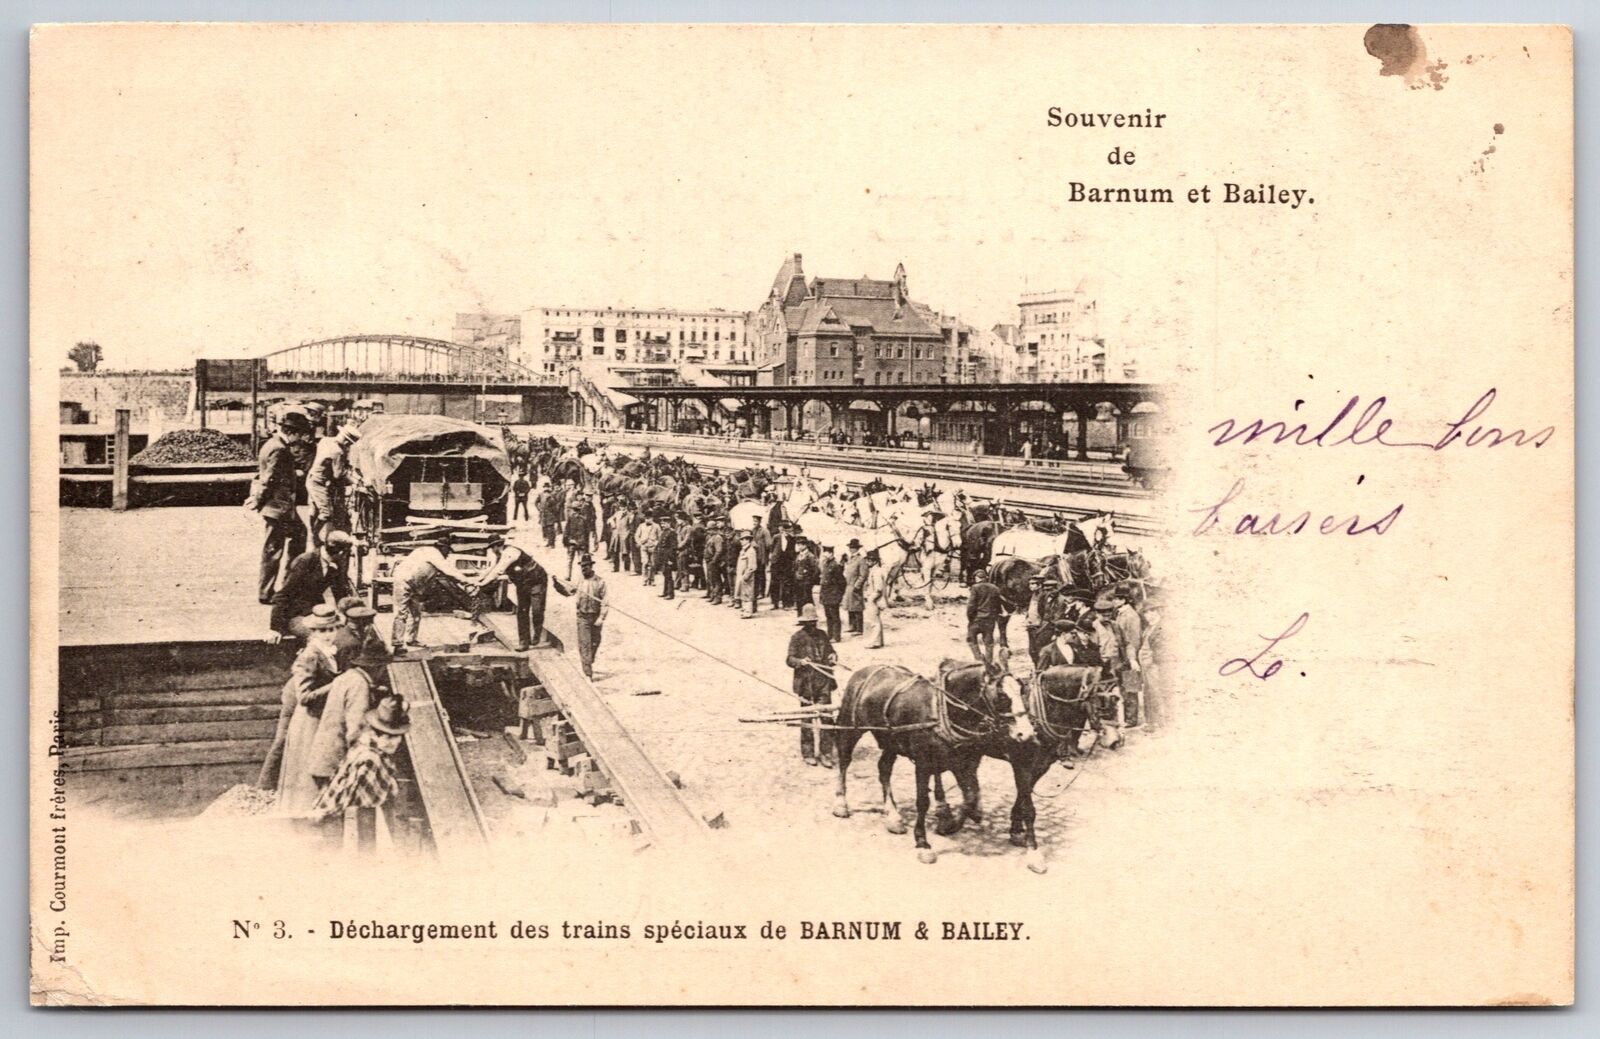 Souvenir Of Barnum & Bailey Circus Train~Unloading The Special Cars~Crowd~1902